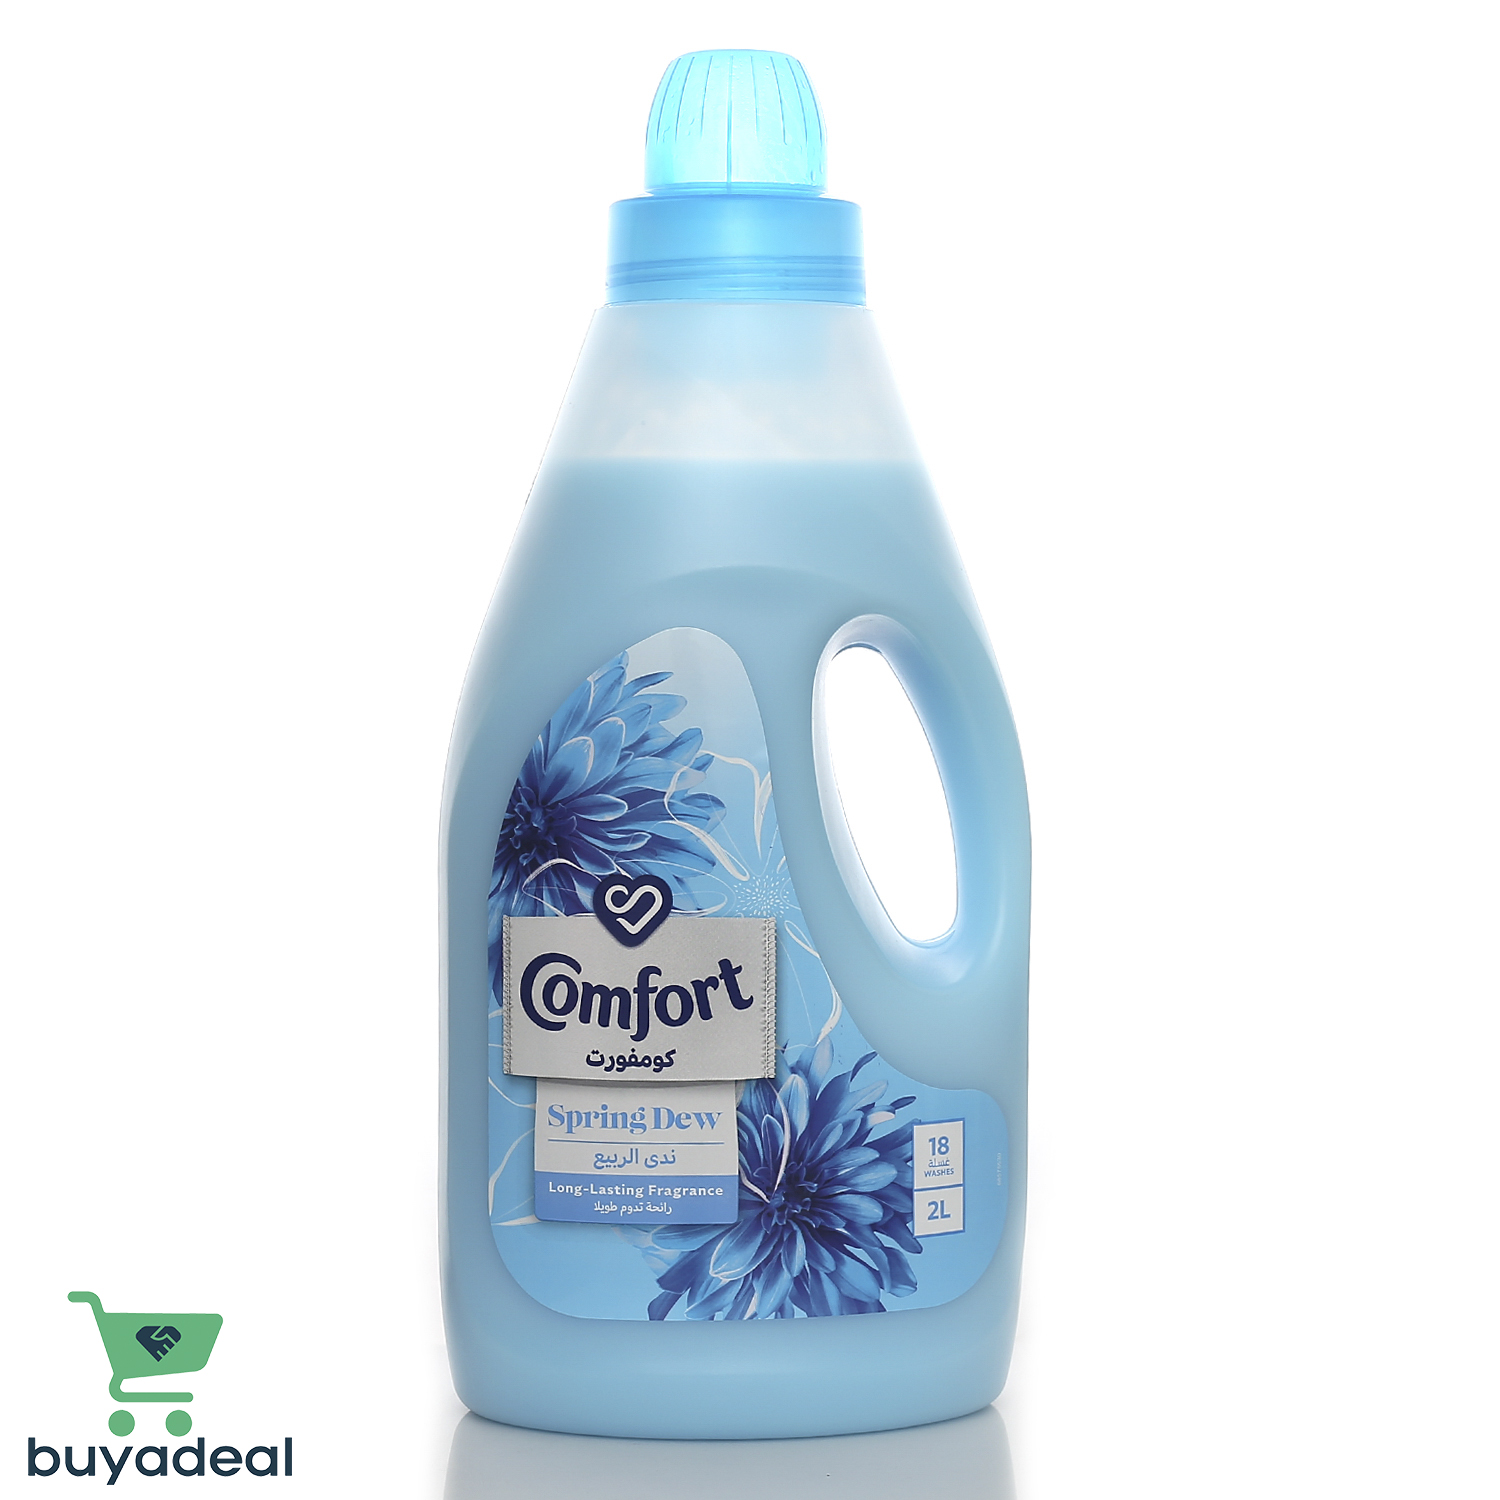 Buyadeal Product Comfort Spring Dew -2L